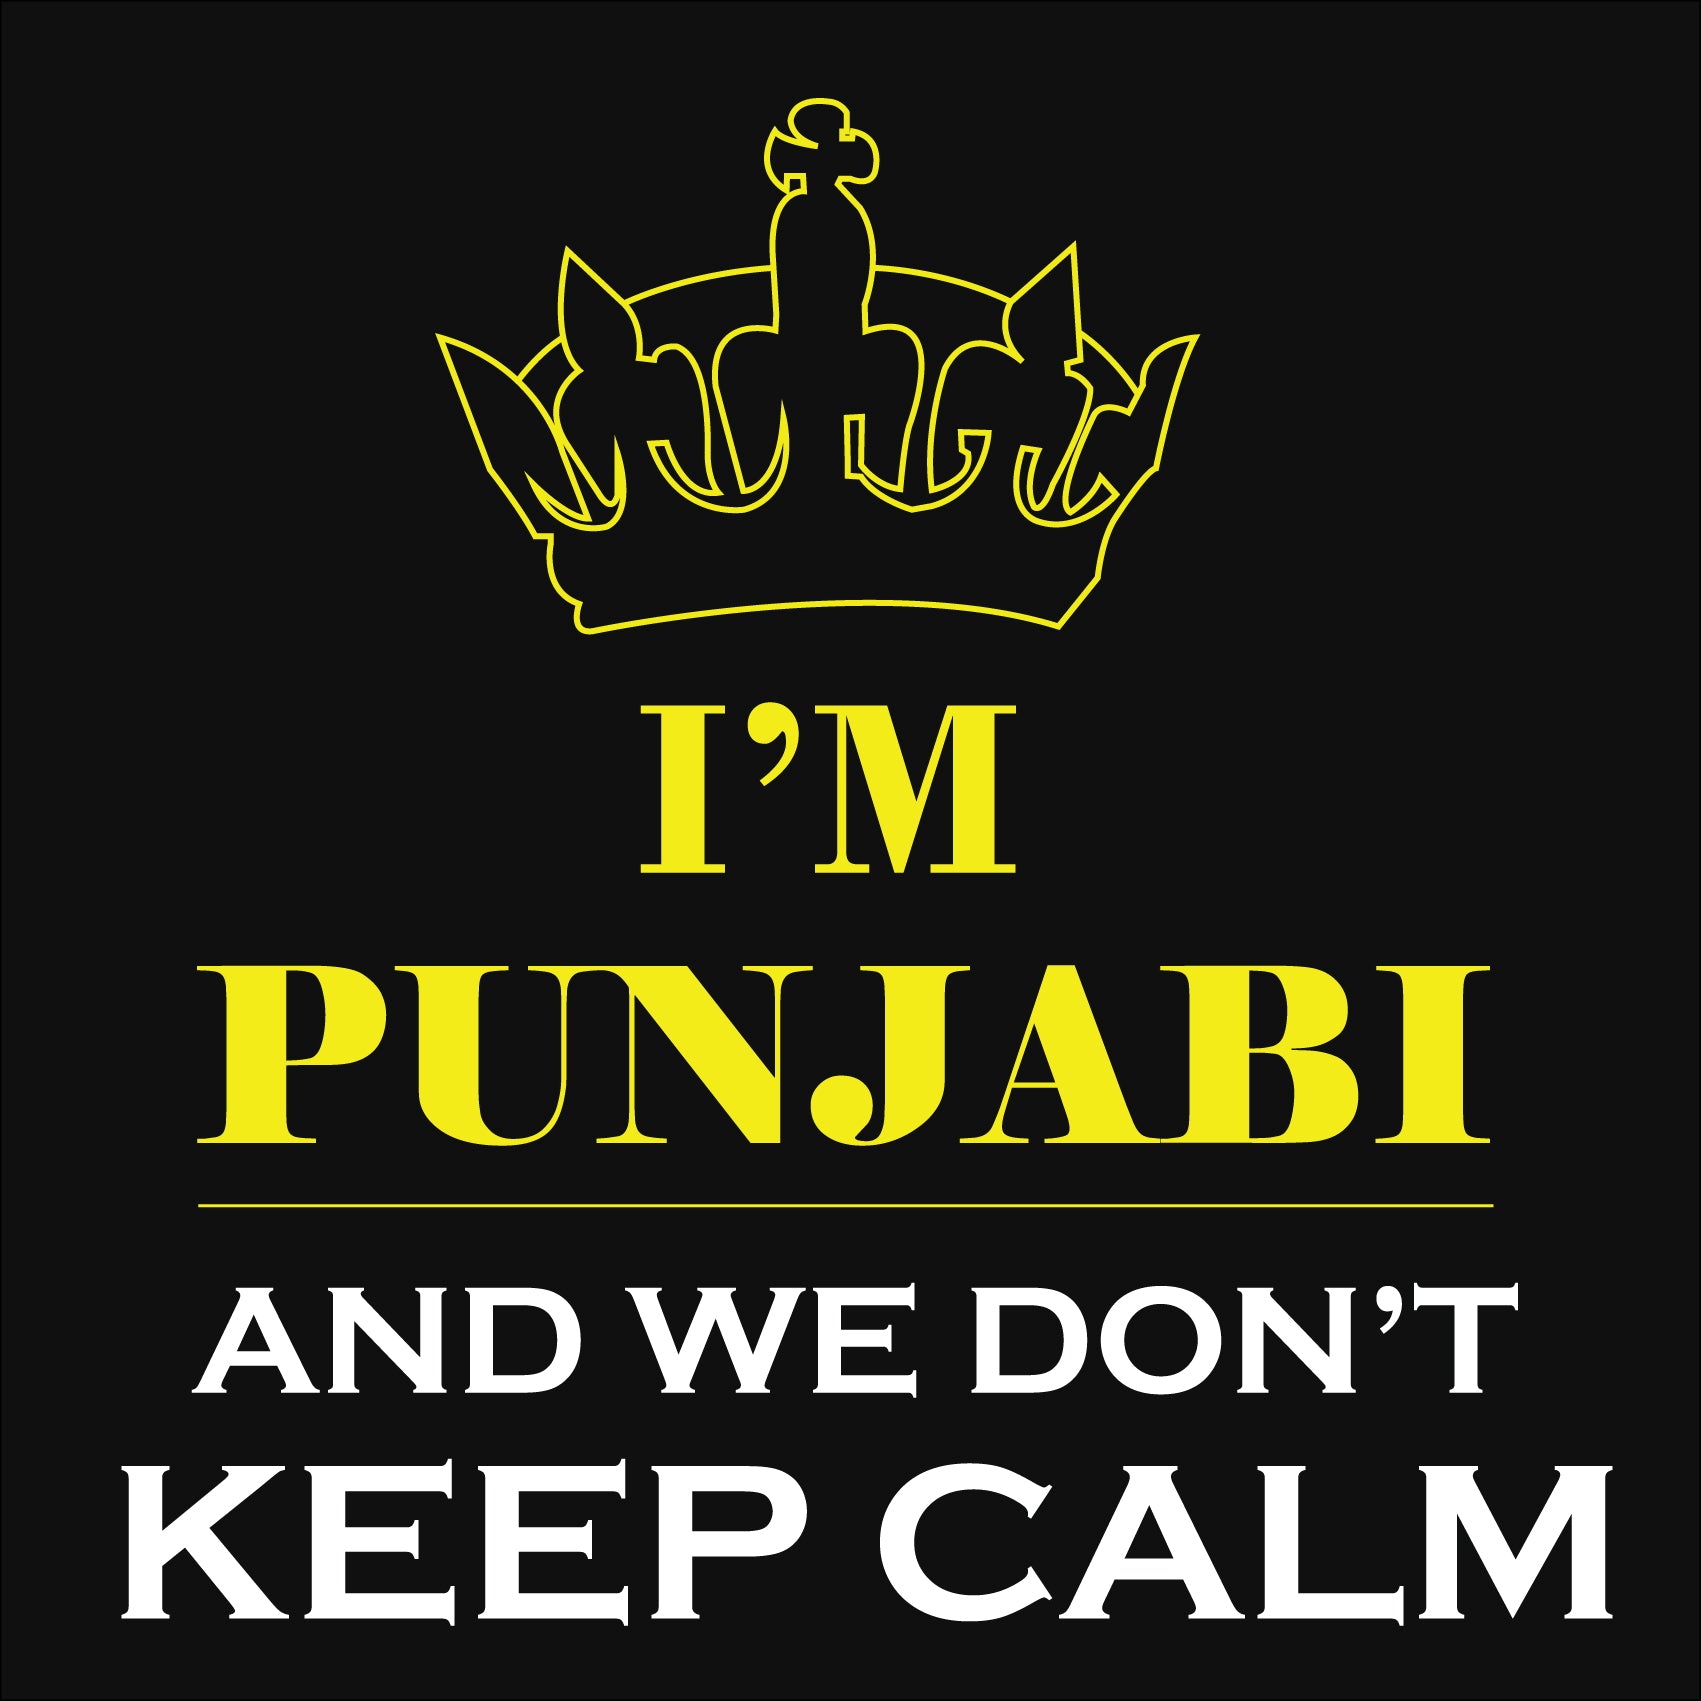 I am Punjabi and We Don’t Keep Calm Reactr Tshirts For Men - Eyewearlabs